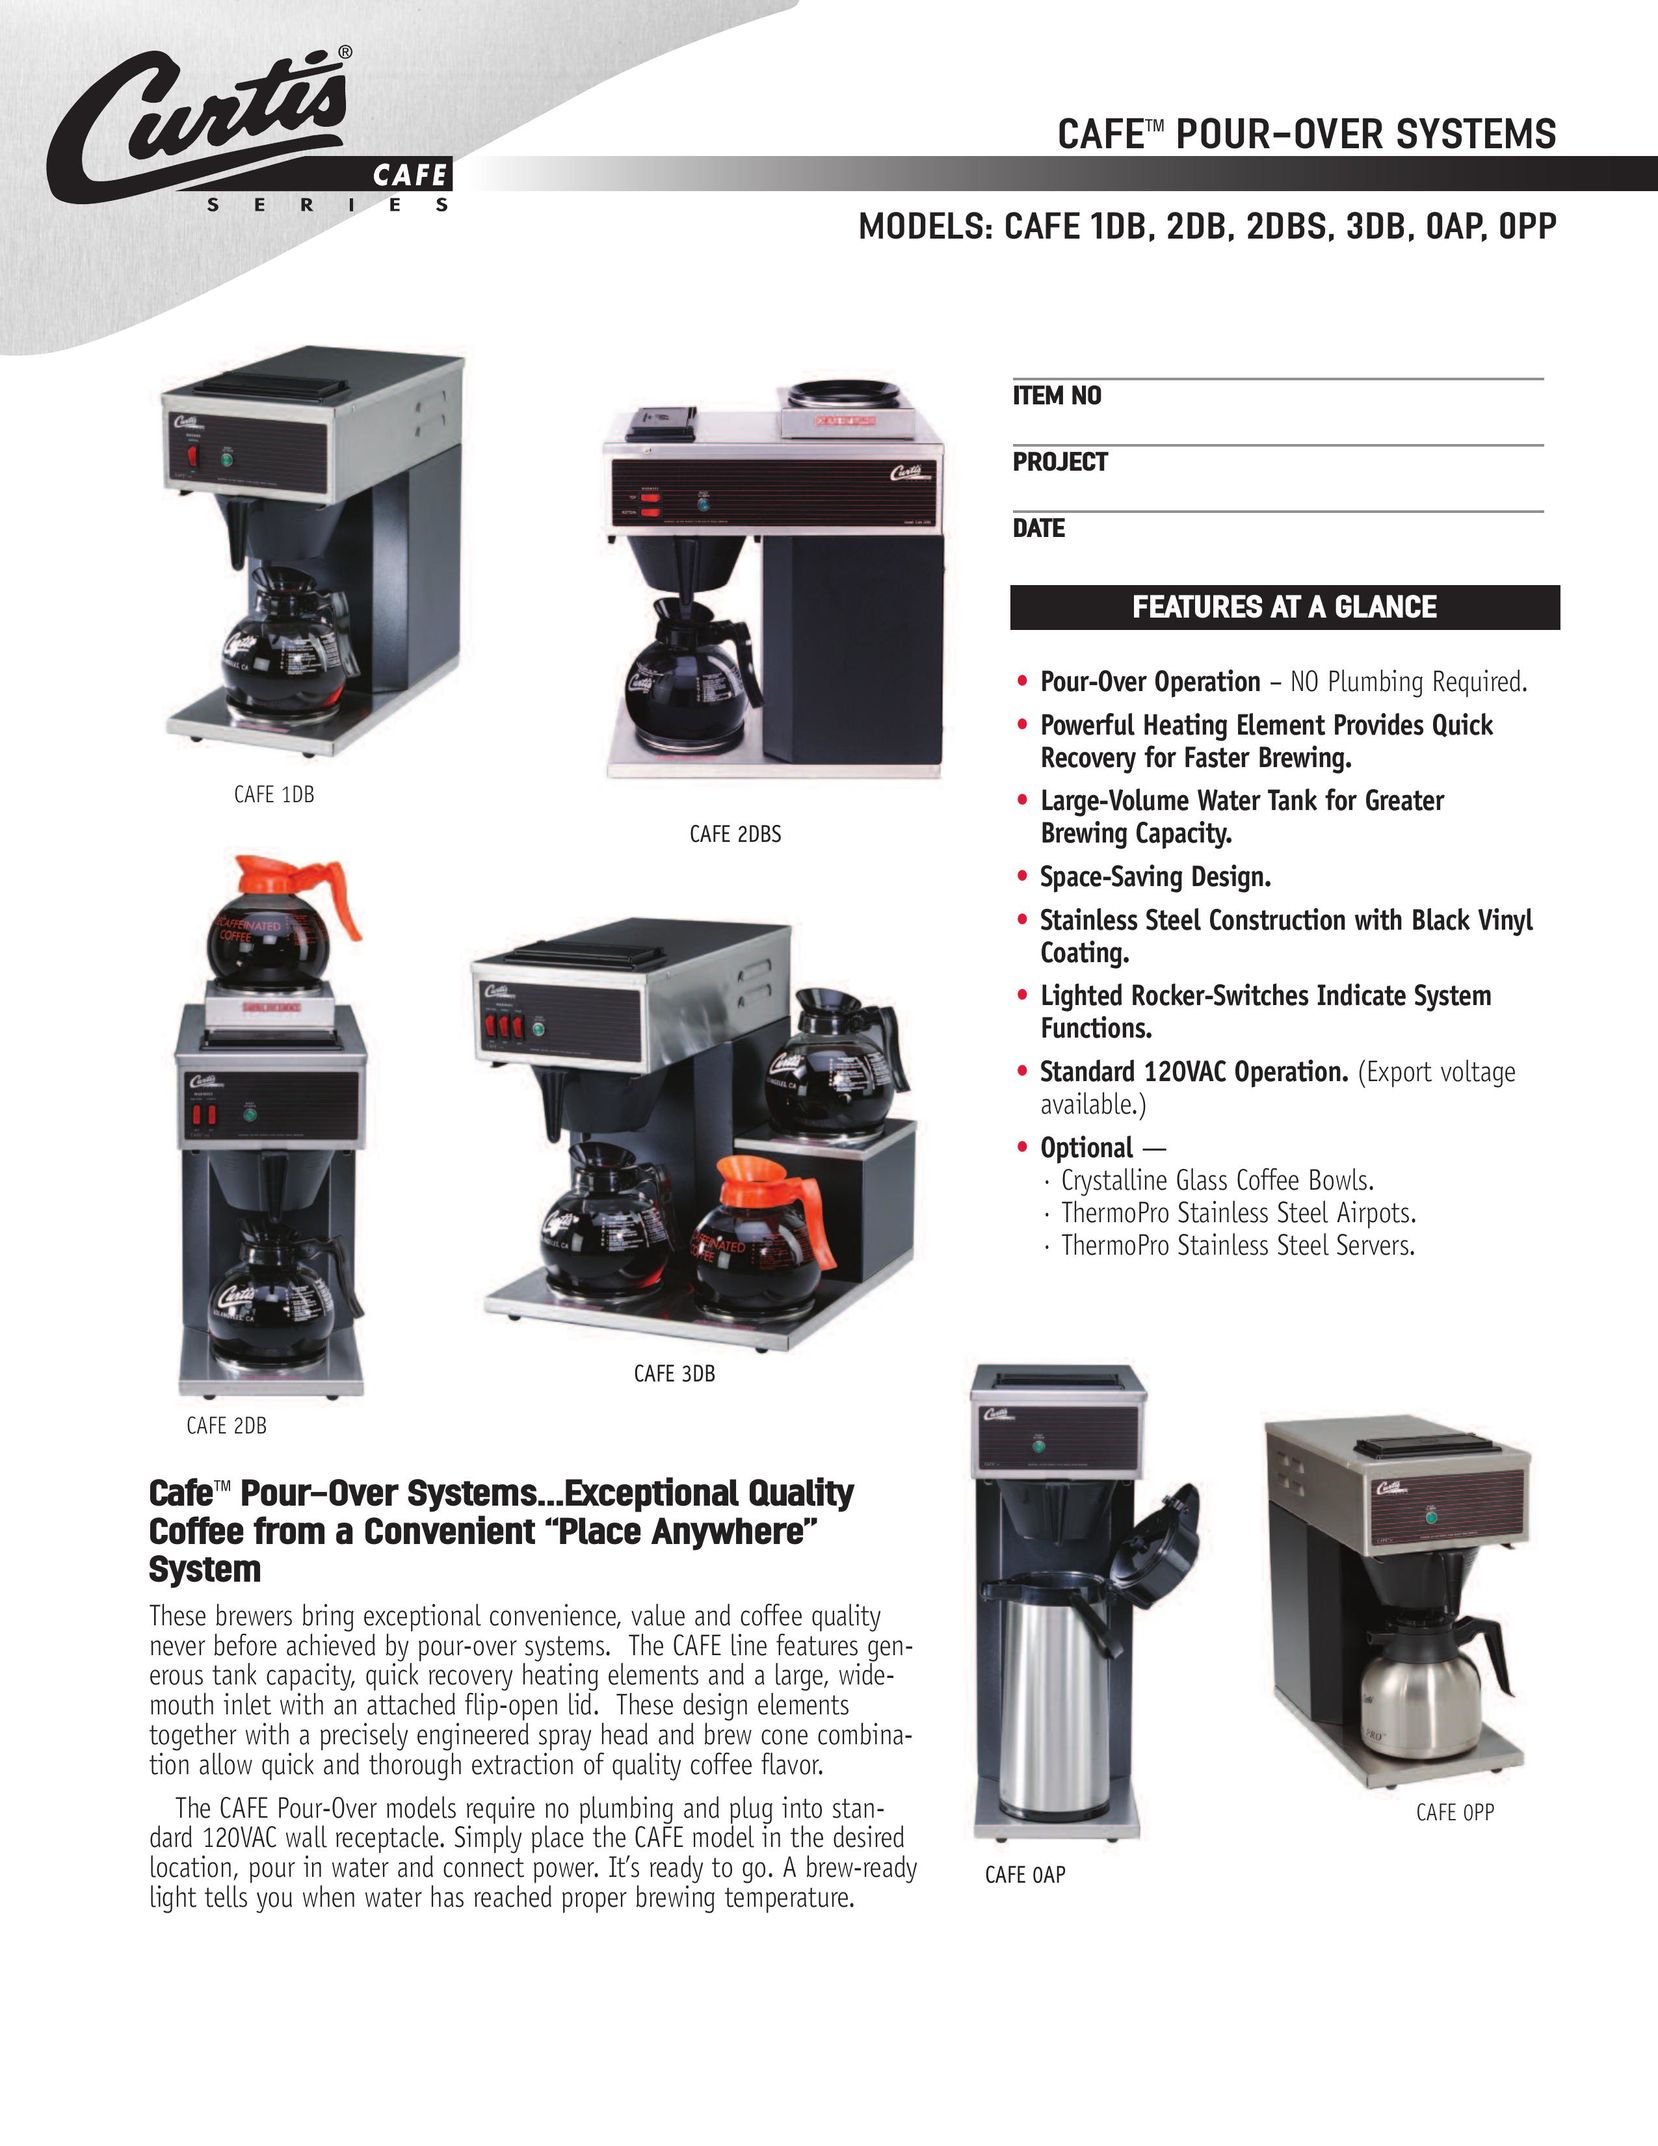 Wibur Curtis Company CAFE 3DB Coffeemaker User Manual